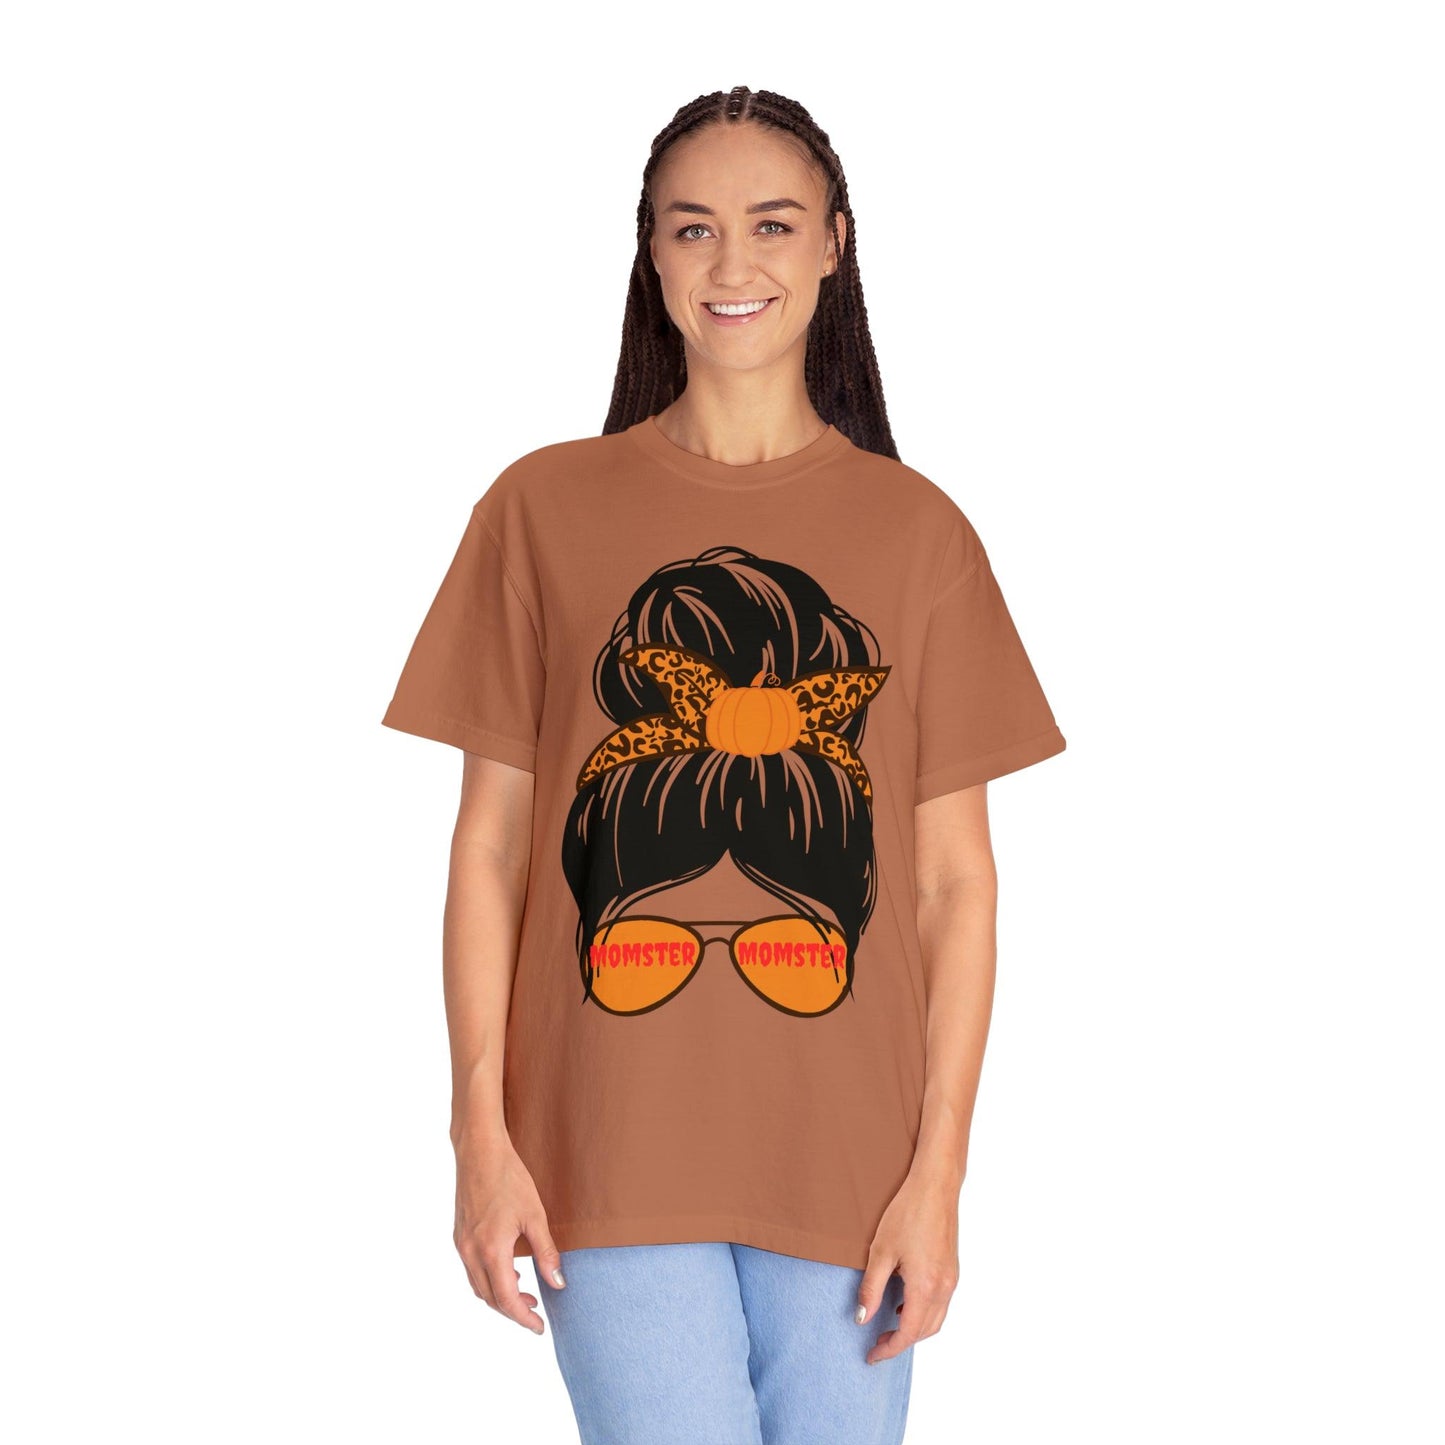 Retro Halloween Tshirt, Momster Shirt, Vintage Shirt Halloween Shirt - Giftsmojo